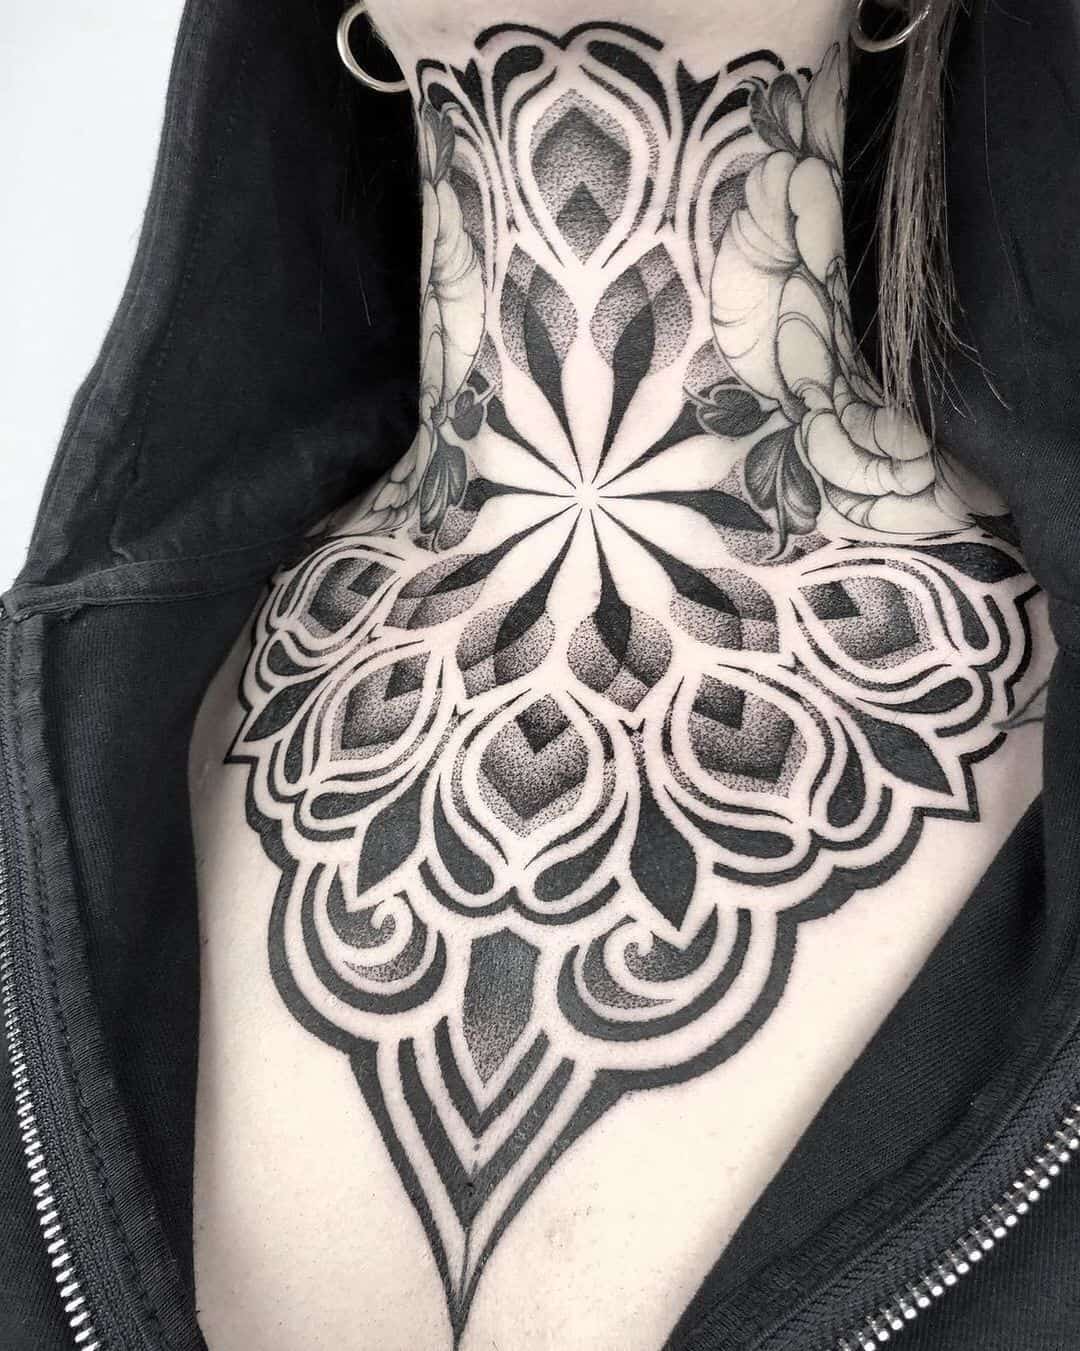 Tattoo tagged with: feminine, tattoos.org, stick and poke, neck, peace  symbol | inked-app.com